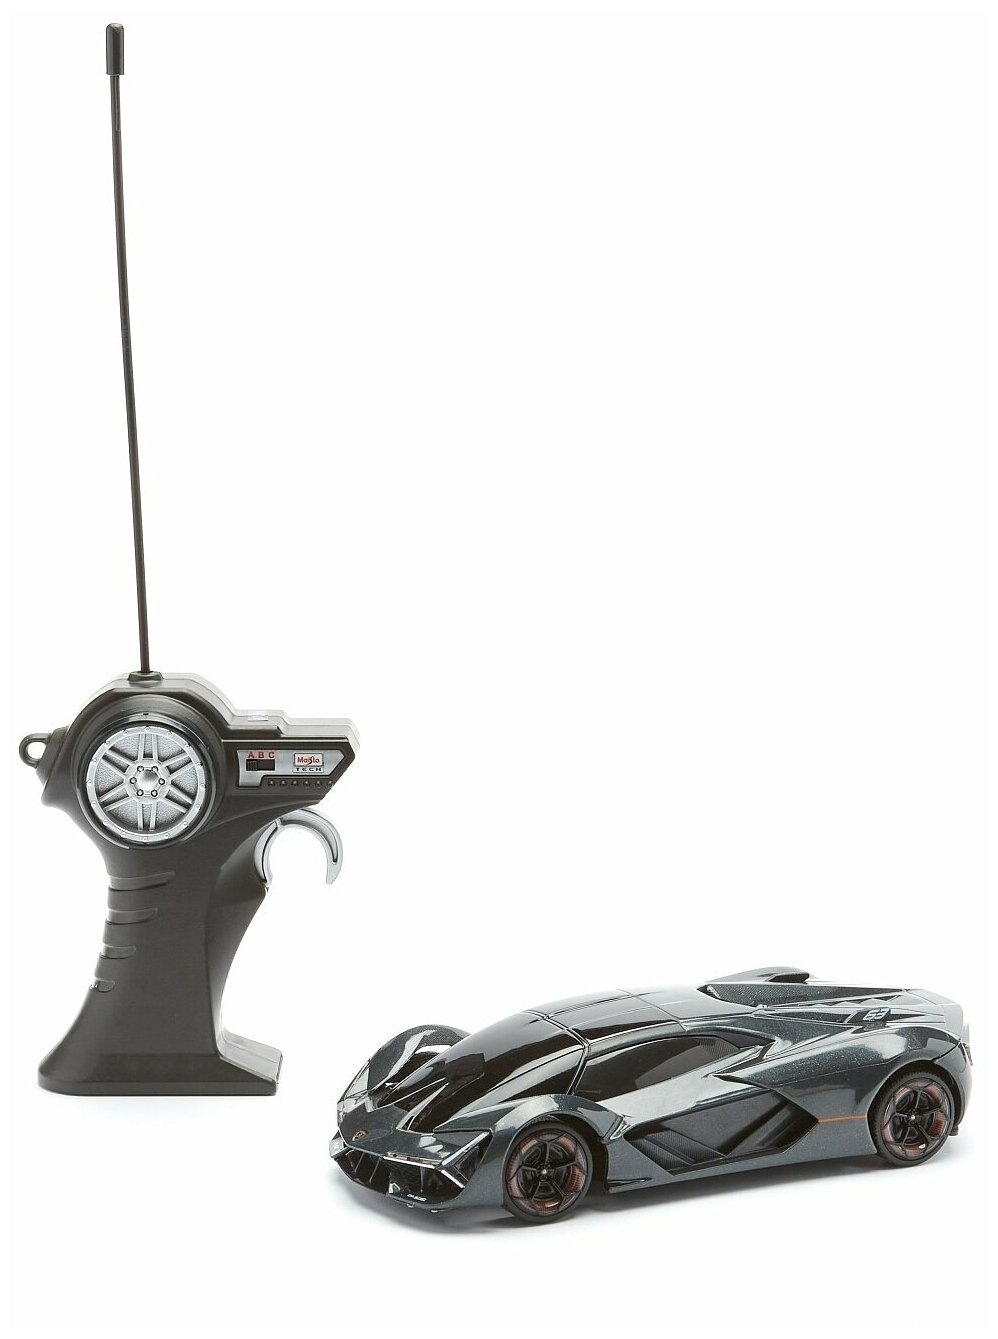 Maisto Радиоуправляемая машинка Lamborghini Terzo Millennio 2.4 GHz, 1:24, черная